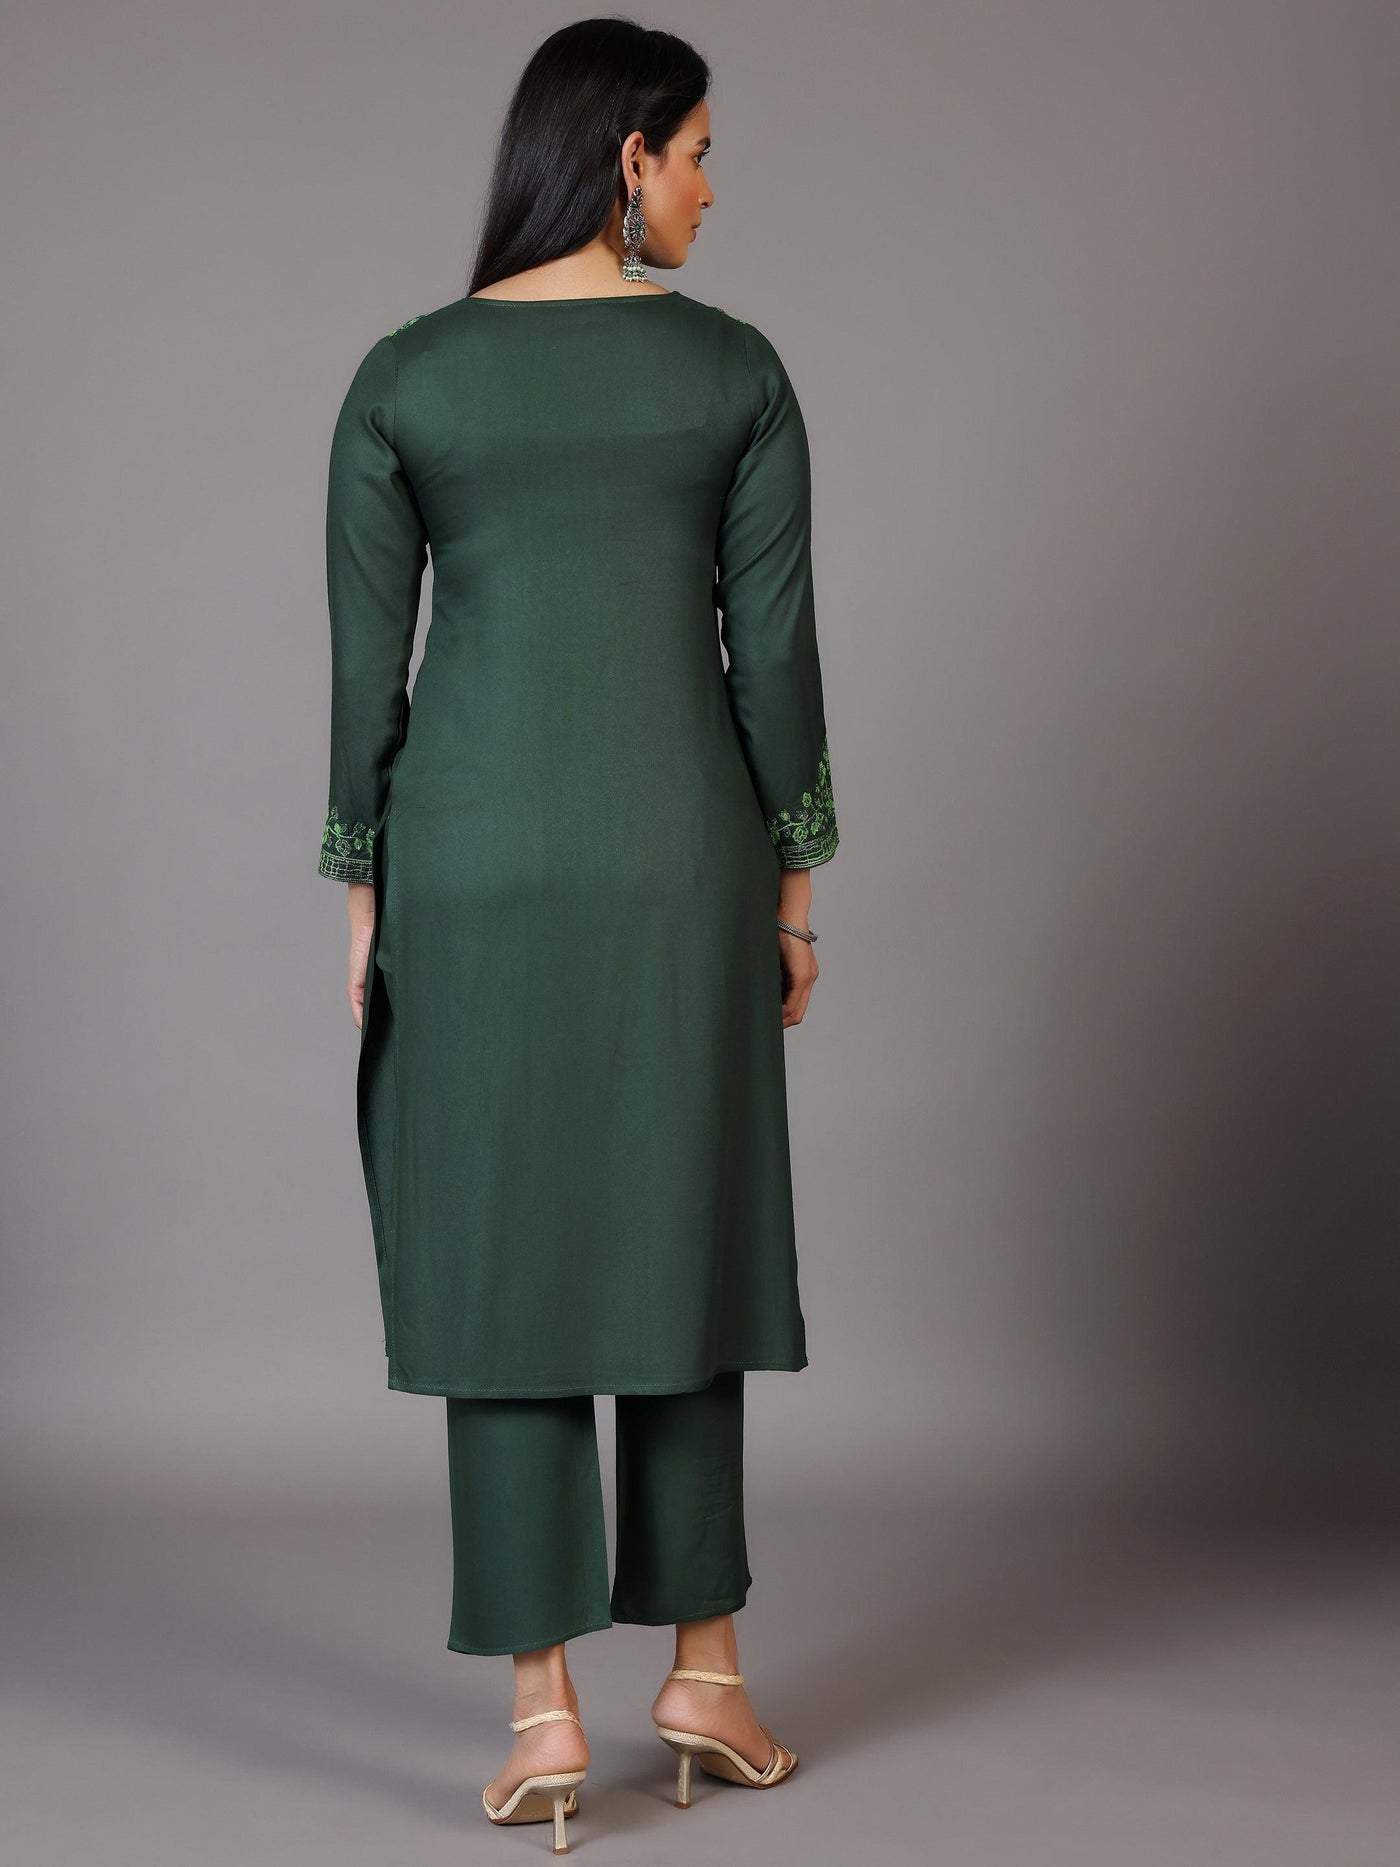 Green Yoke Design Wool Blend Straight Kurta Set - Libas